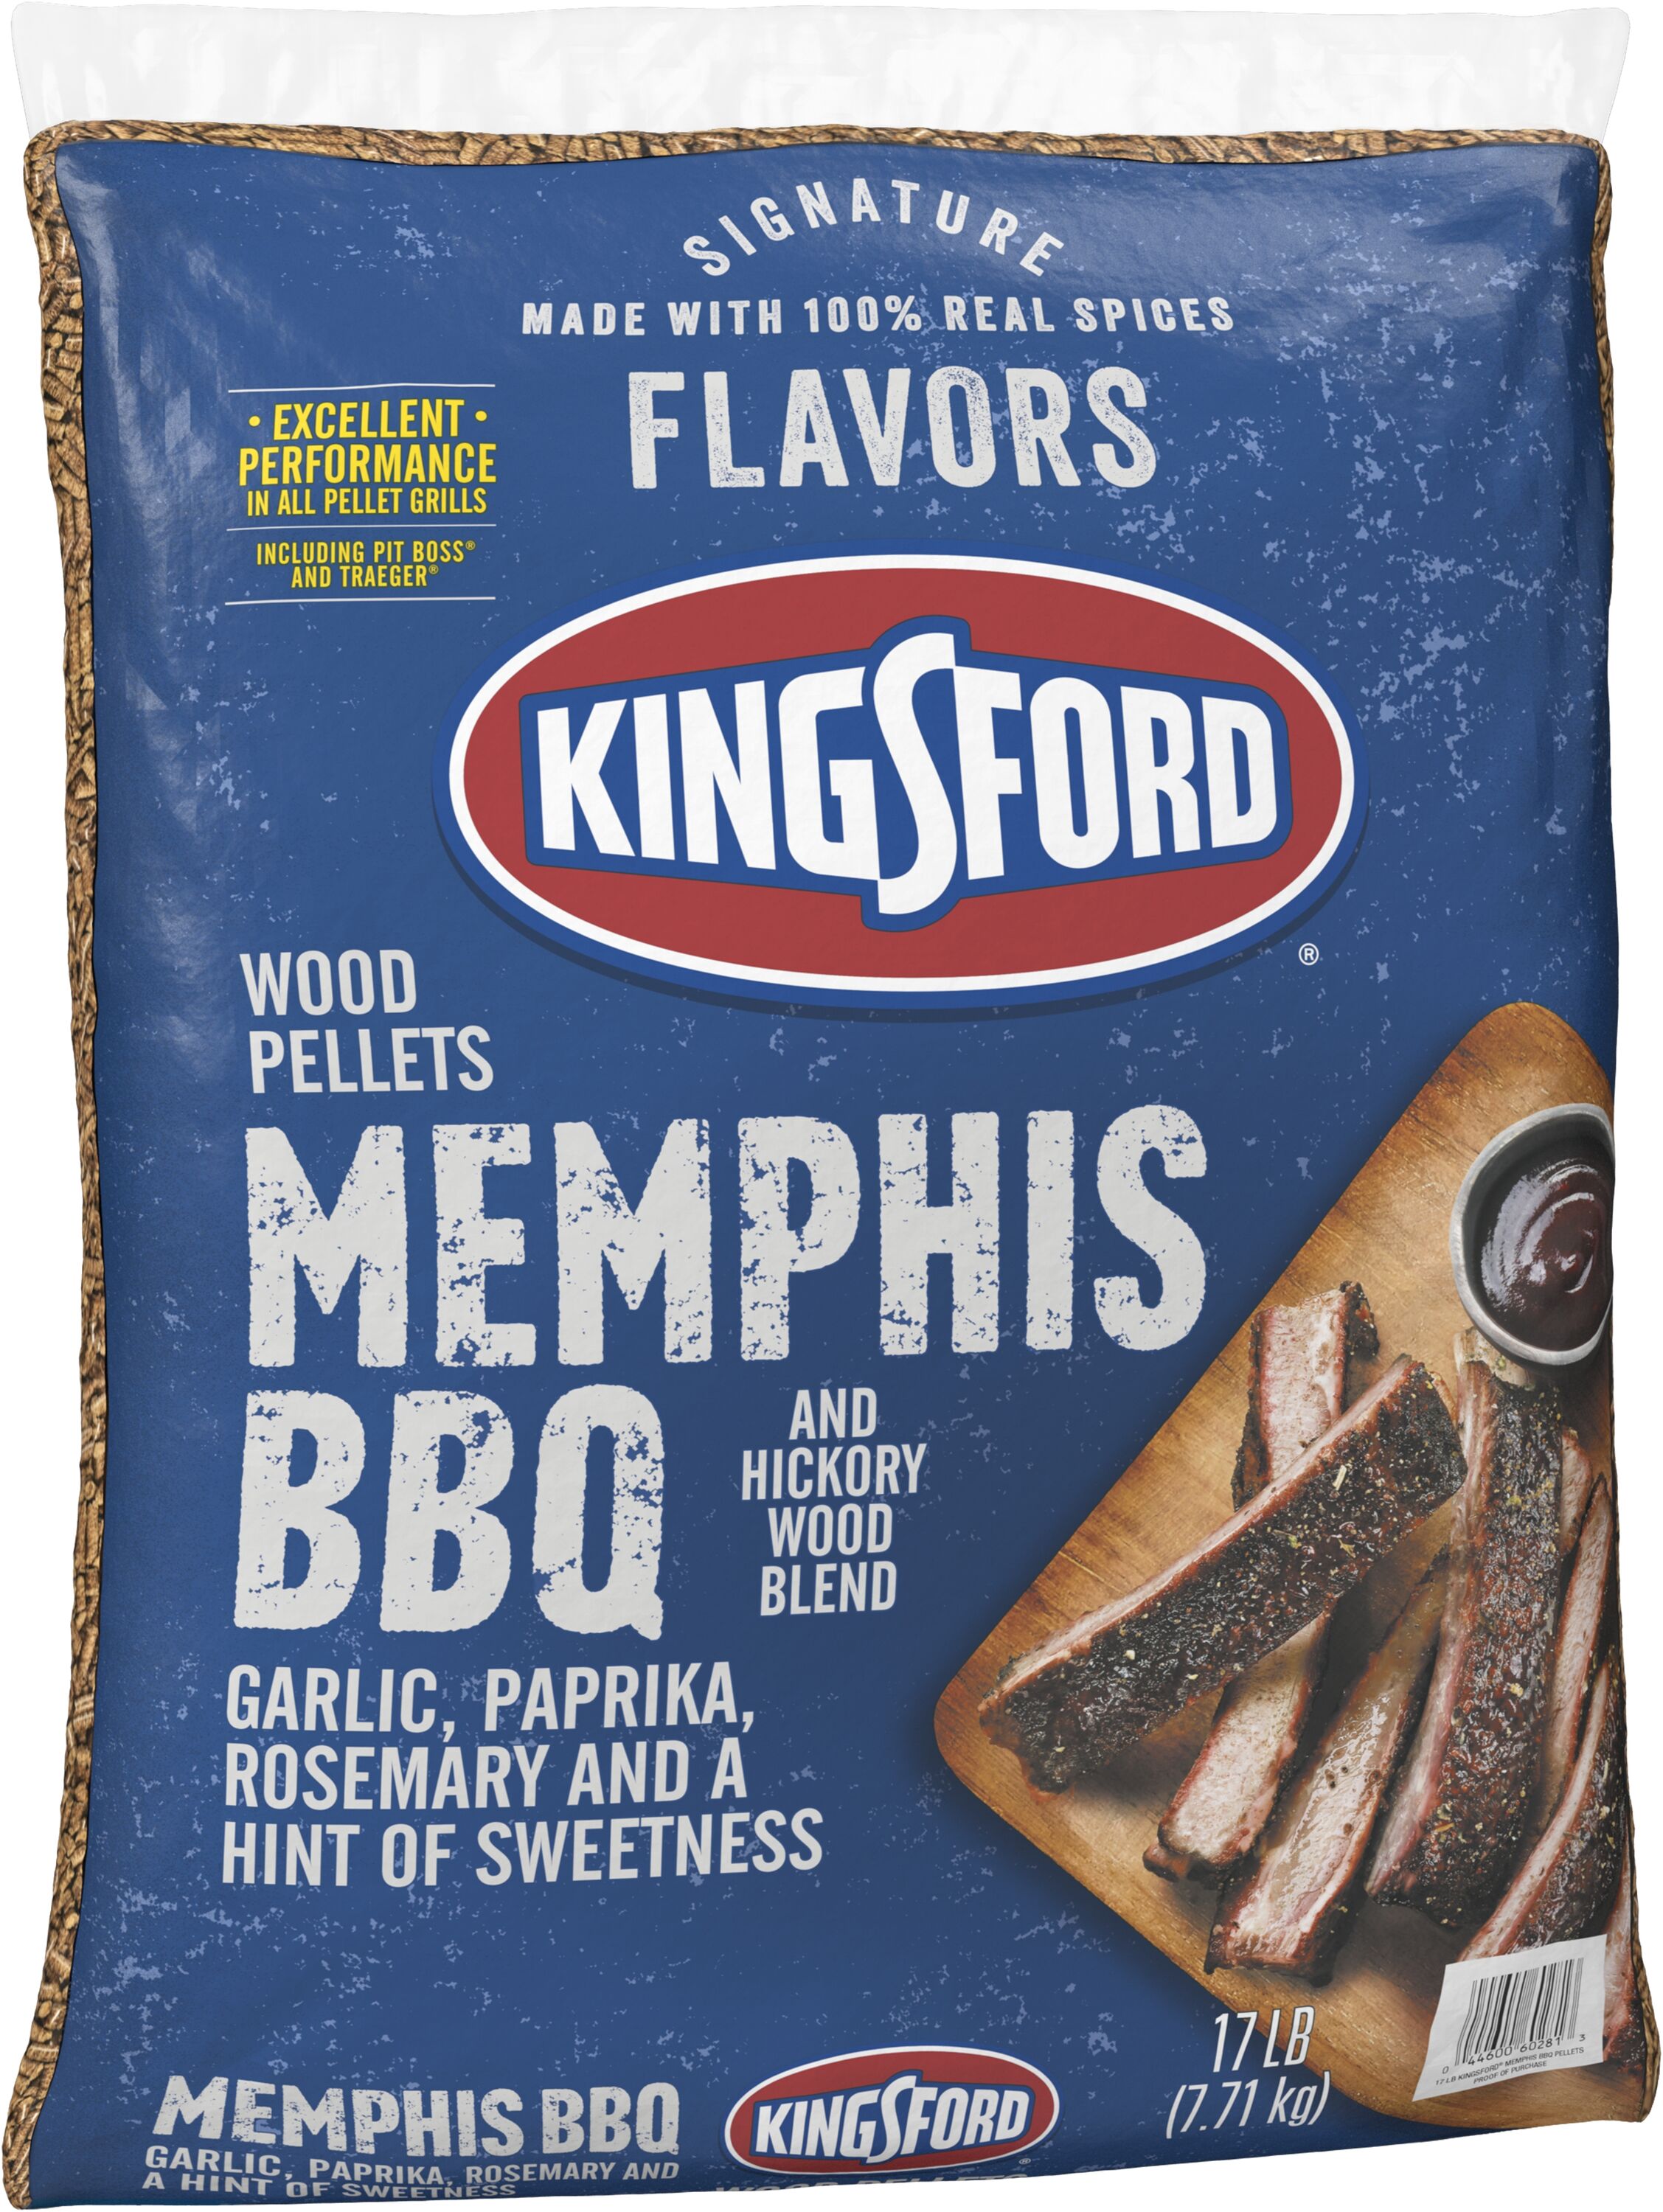 Kingsford Signature Flavors Memphis Bbq 17-lb Wood Pellets in the Grill department at Lowes.com